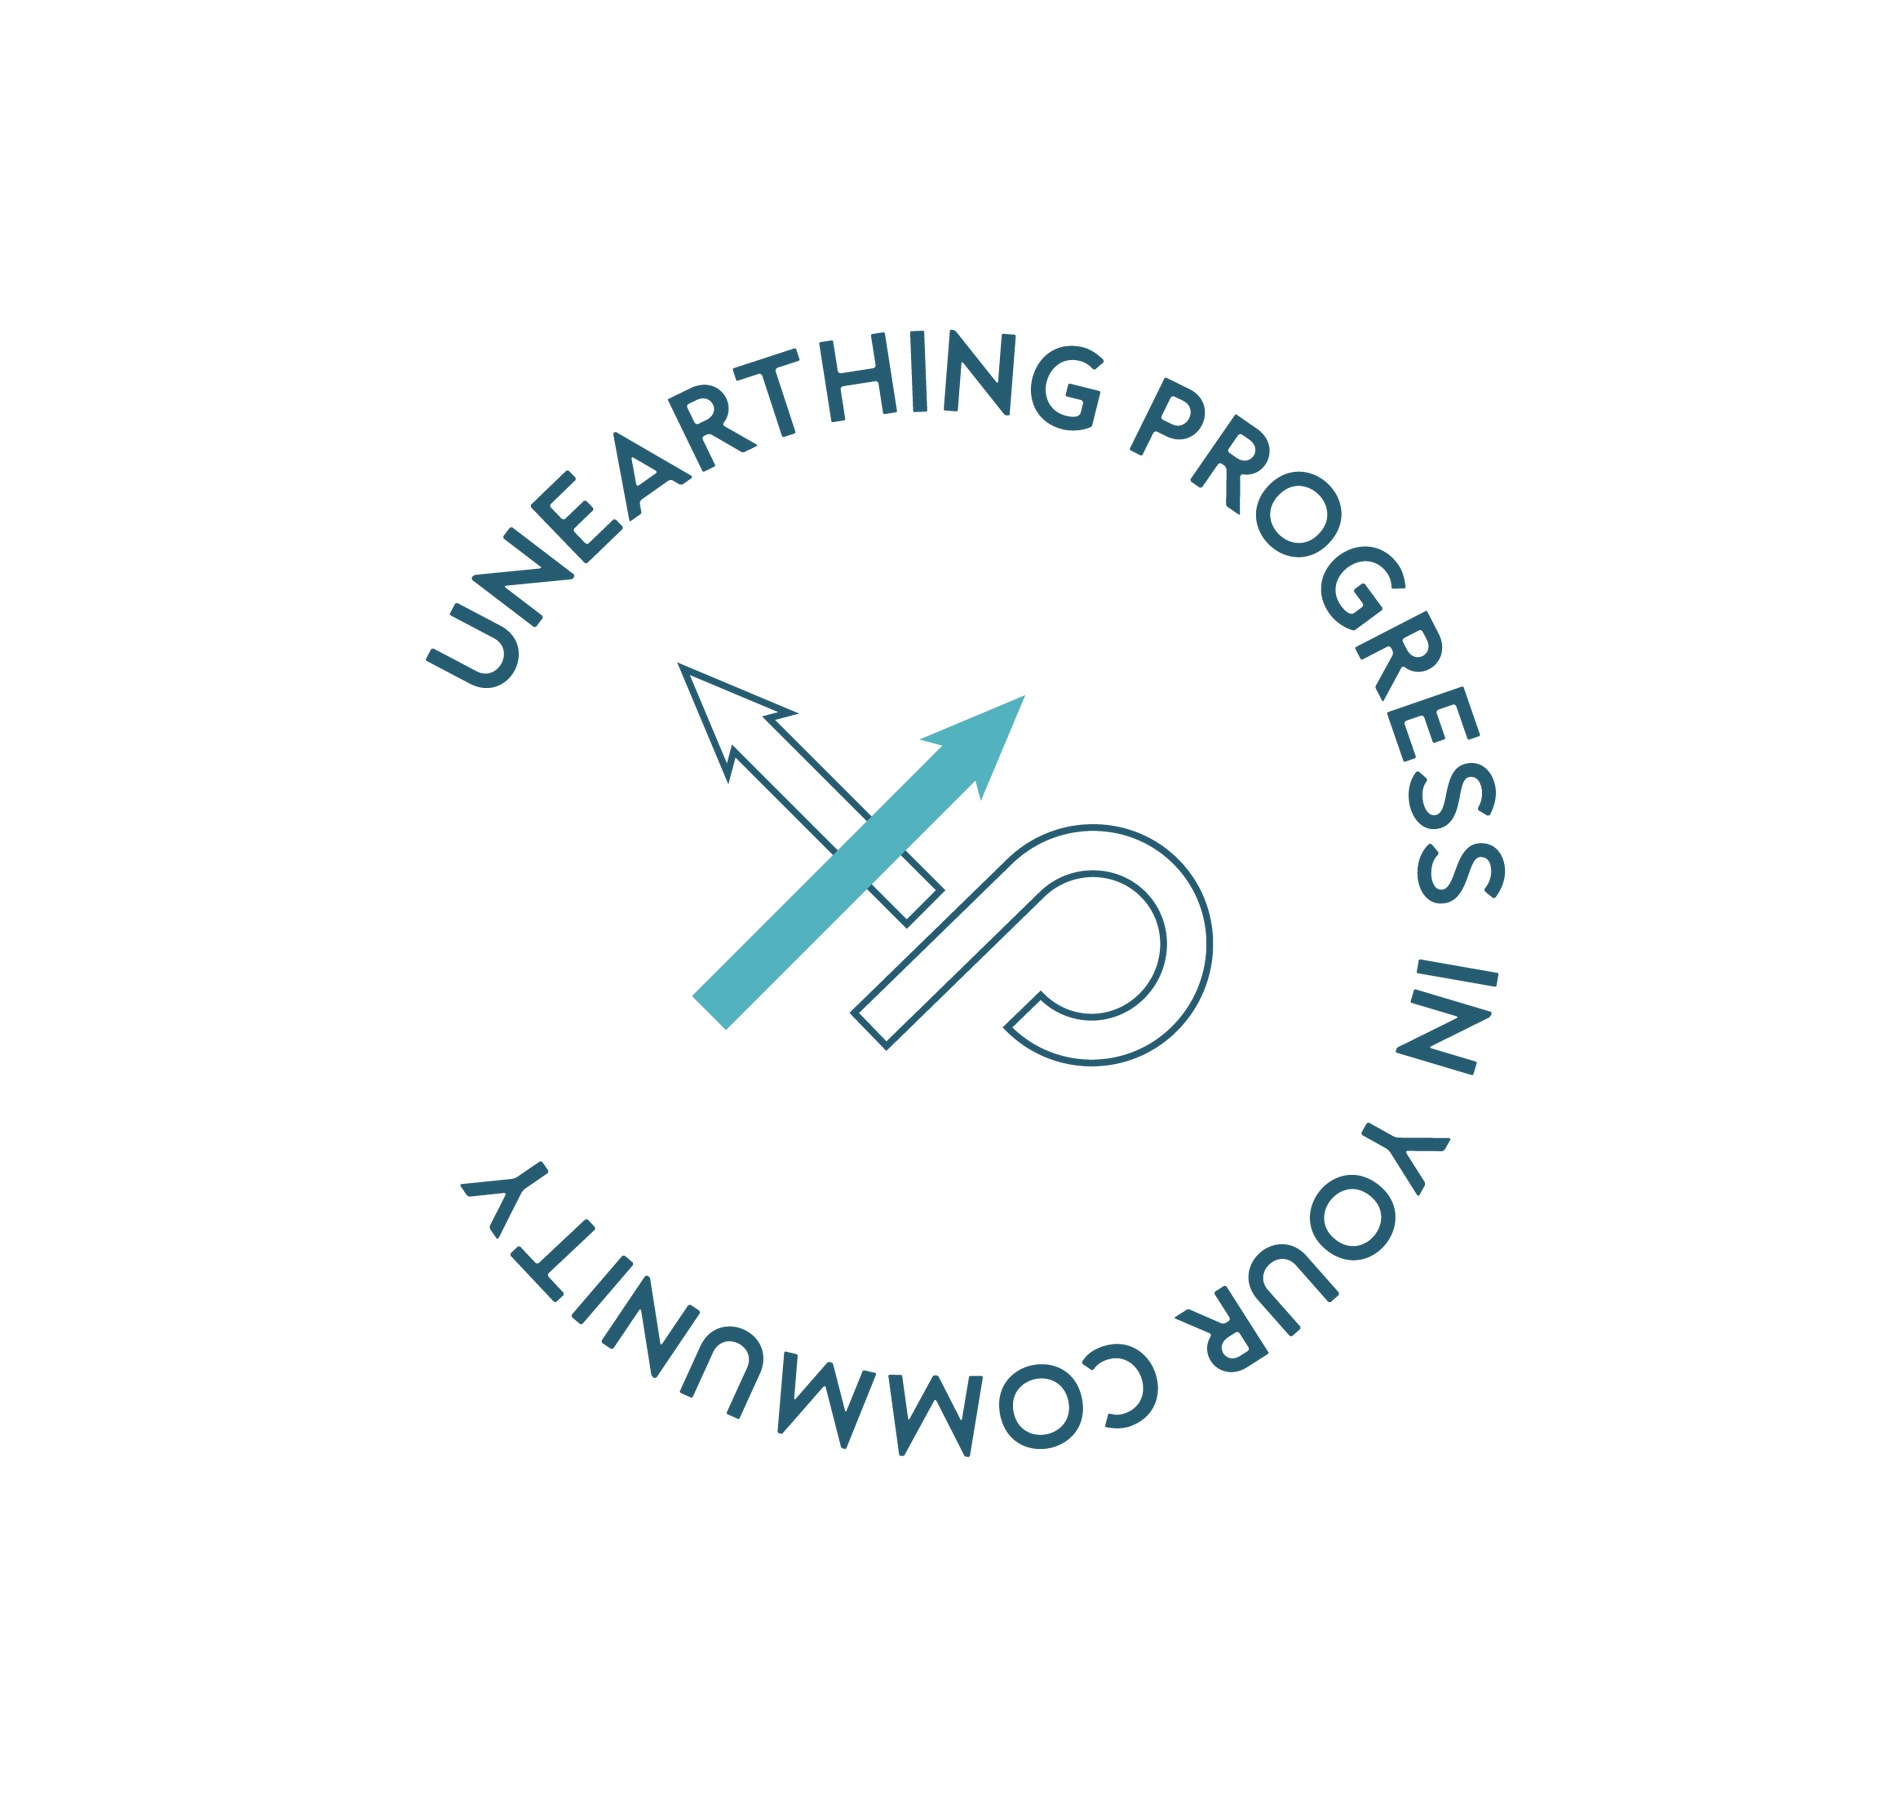 Unearthing Progress in Your Community Logo